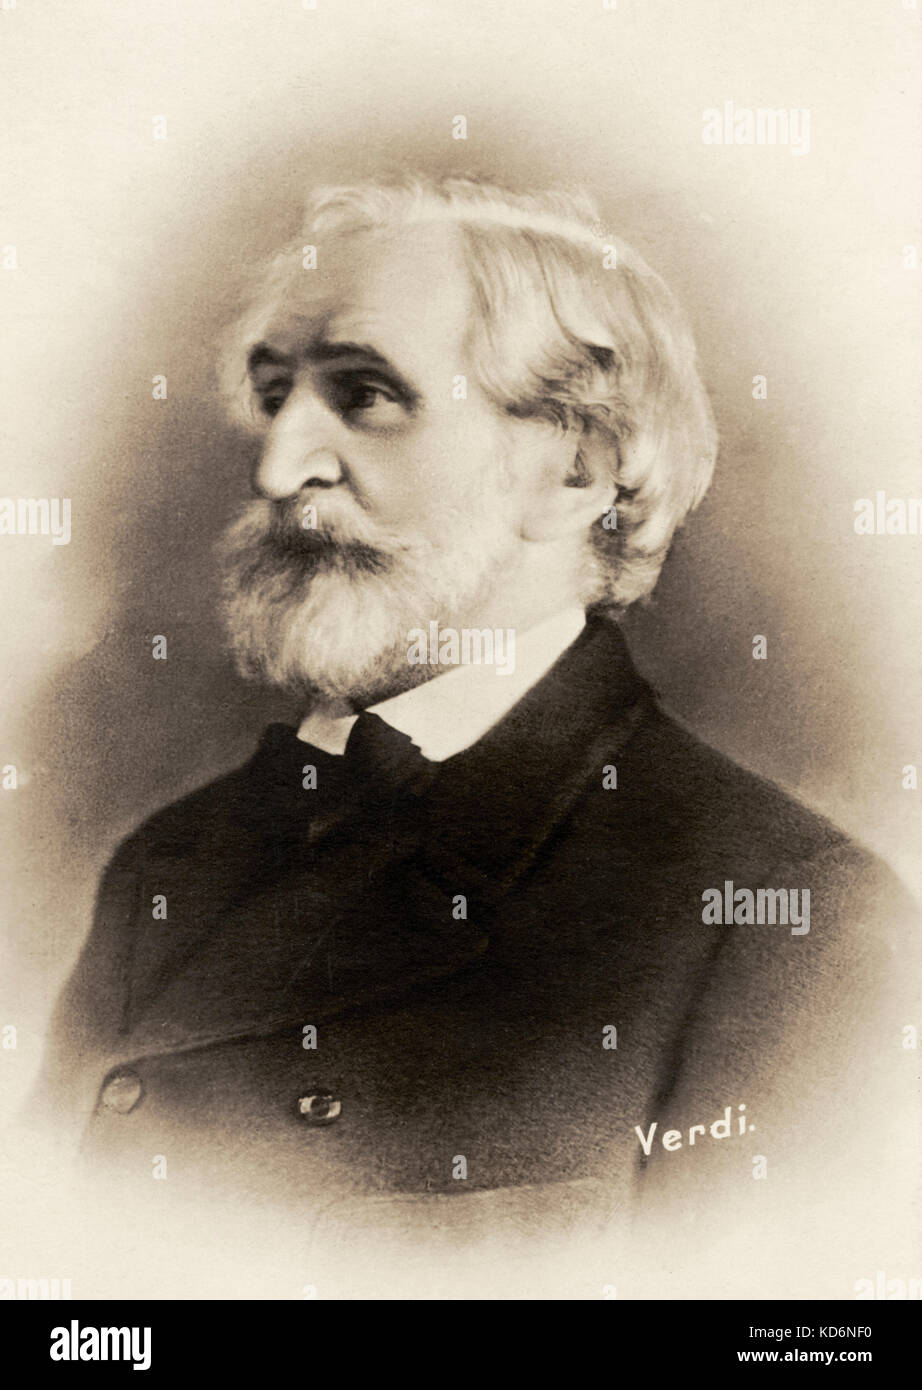 Giuseppe Verdi portrait. Italian composer  9 or 10 October 1813 - 27 January 1901. Stock Photo